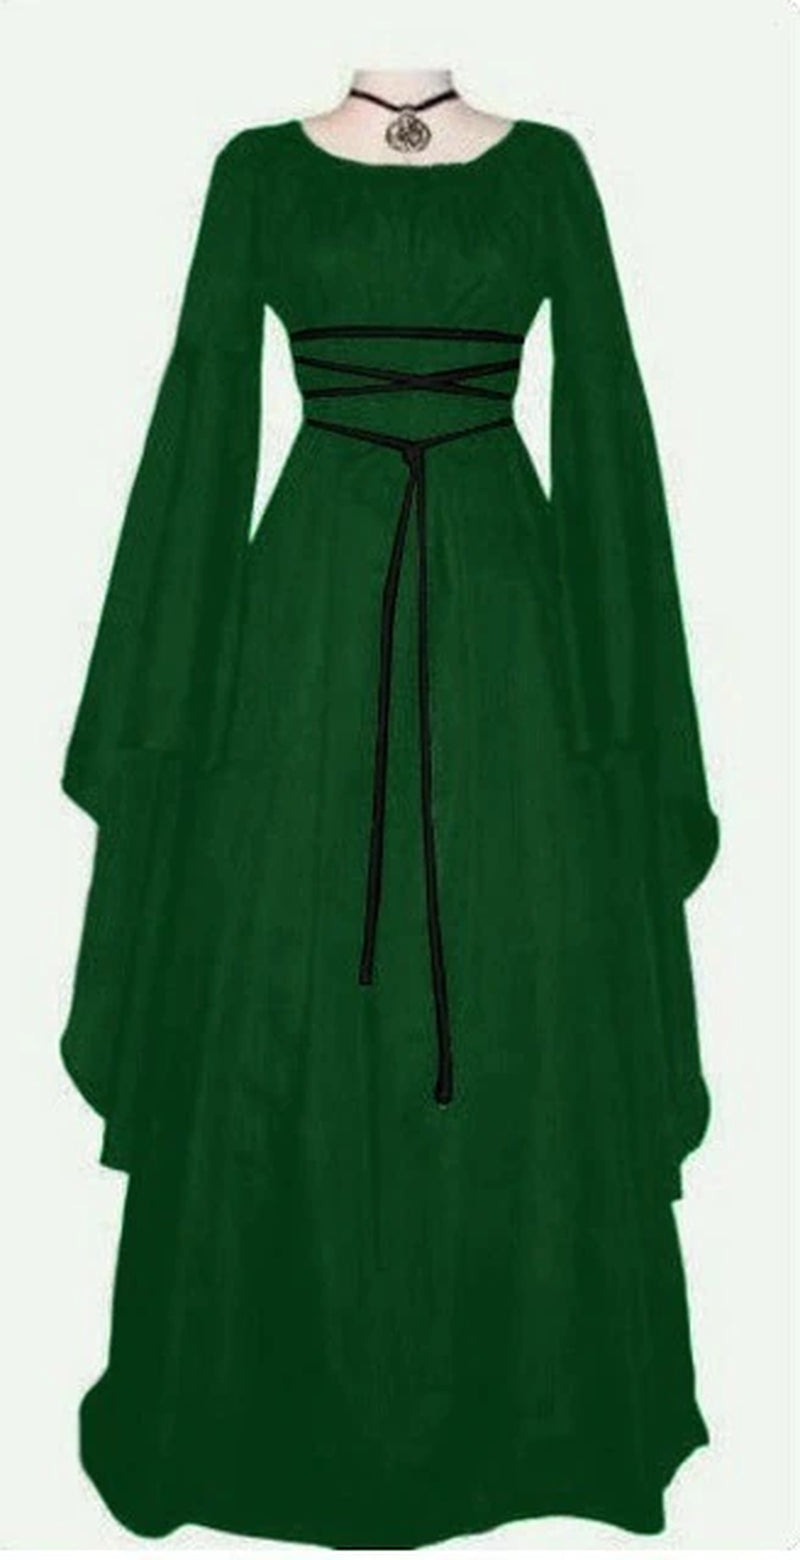 New Women Fashion Vintage Style Women Medieval Dress Gothic Dress Floor Length Women Cosplay Dress Retro Long Gown Dress